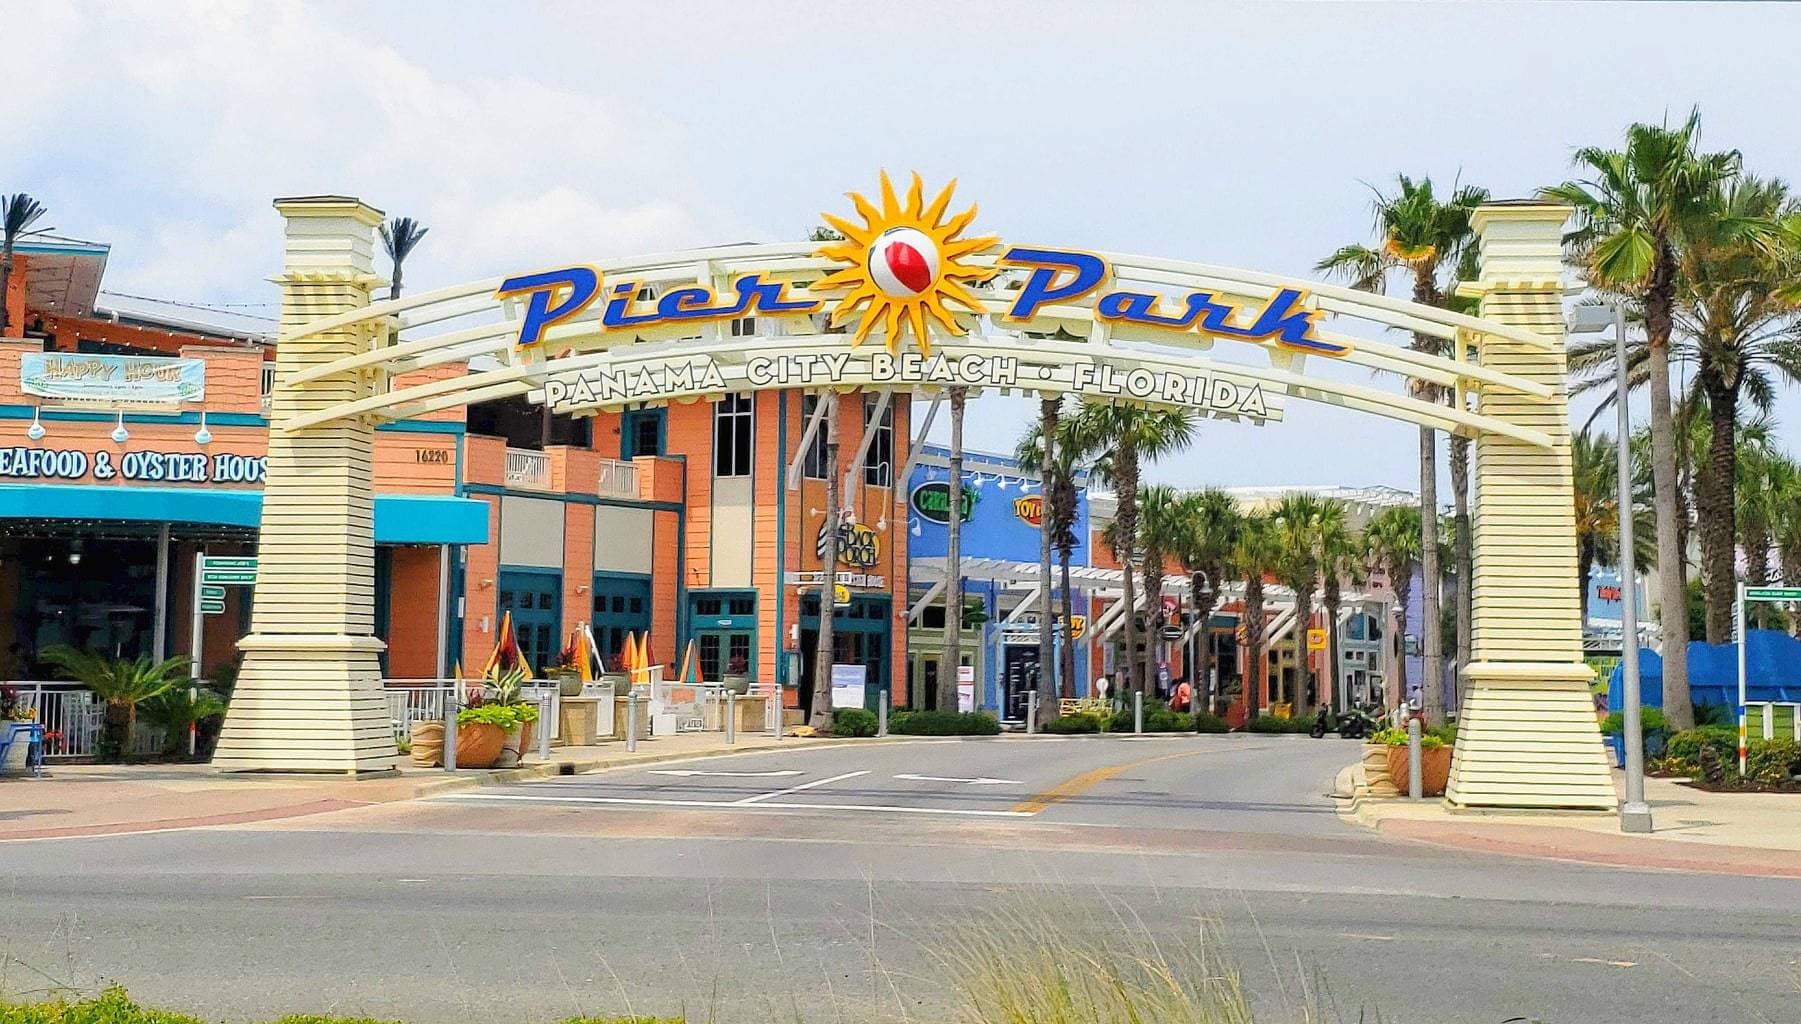 12 Things to do in Panama City Beach Florida's Real Fun Beach